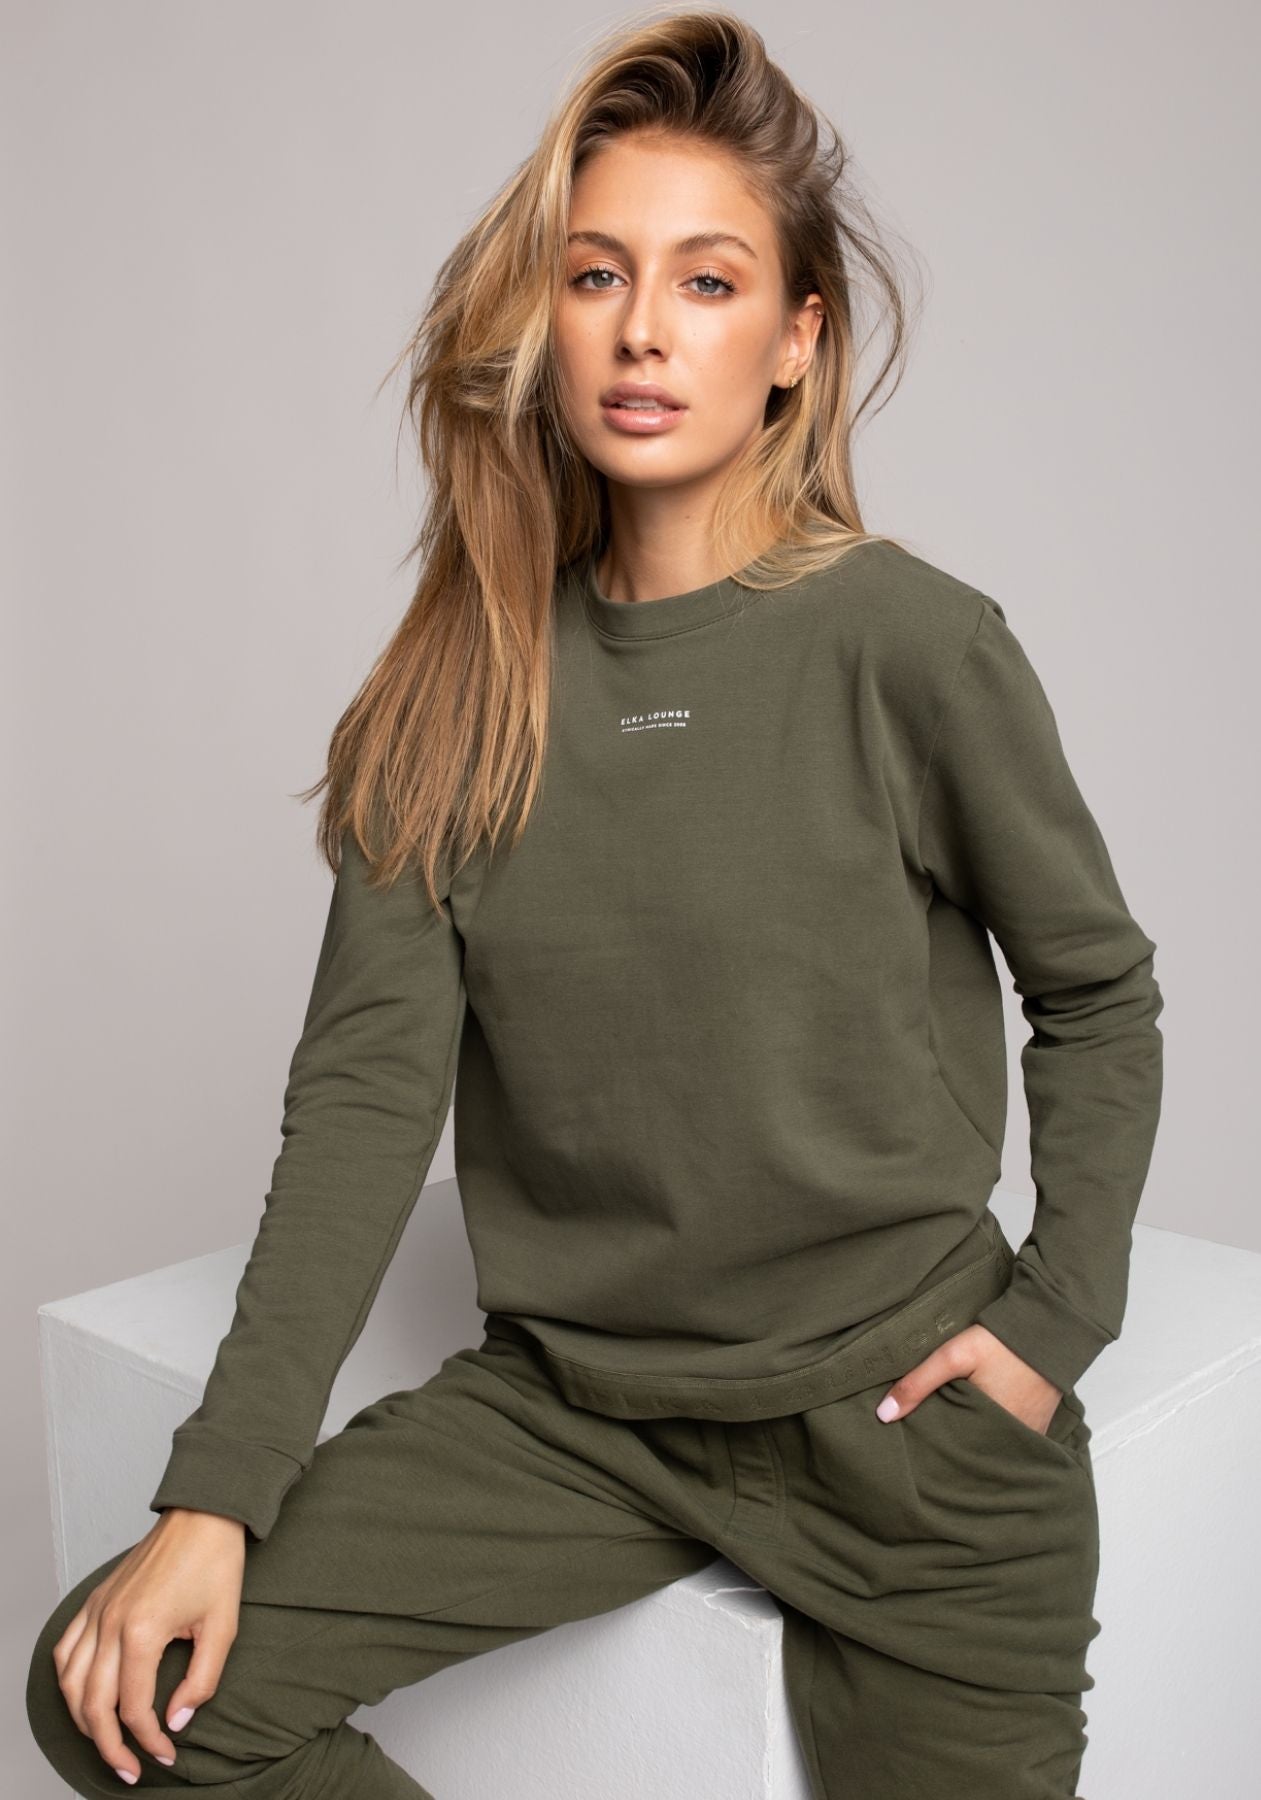 Women sweatshirt organic cotton Moss green - regular